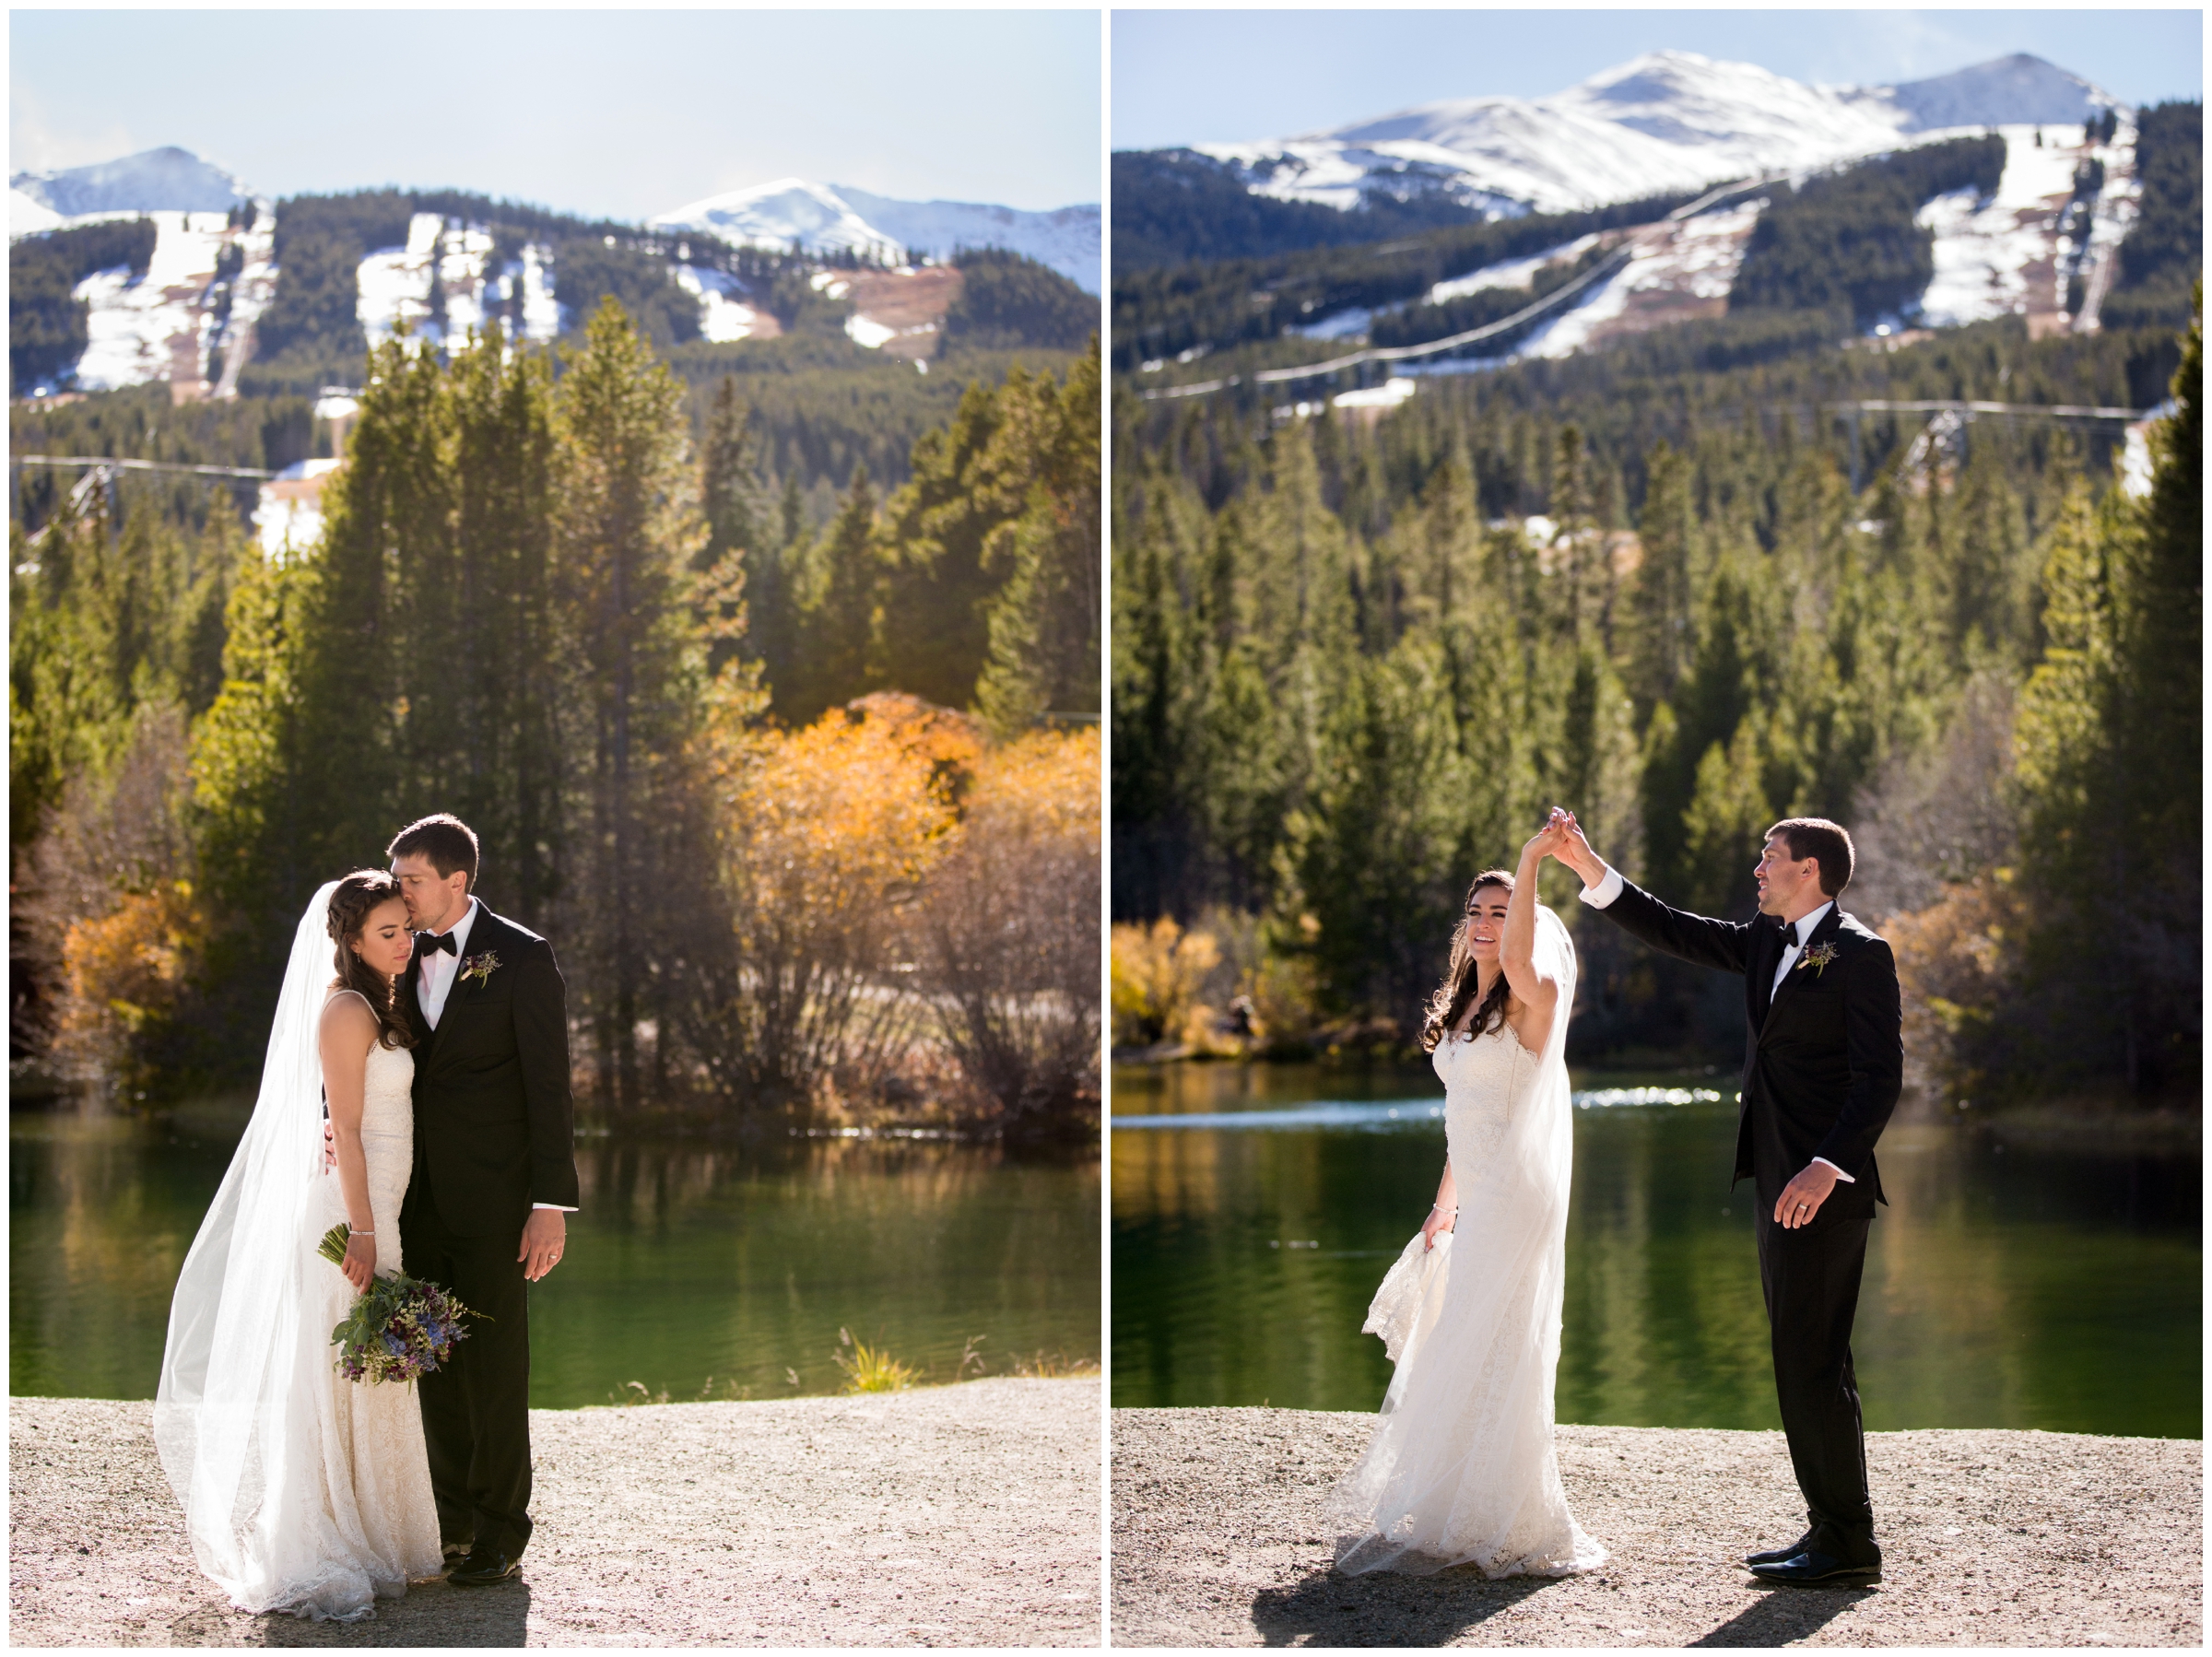 groom spinning bride at Sawmill reservoir Breckenridge Colorado wedding photography